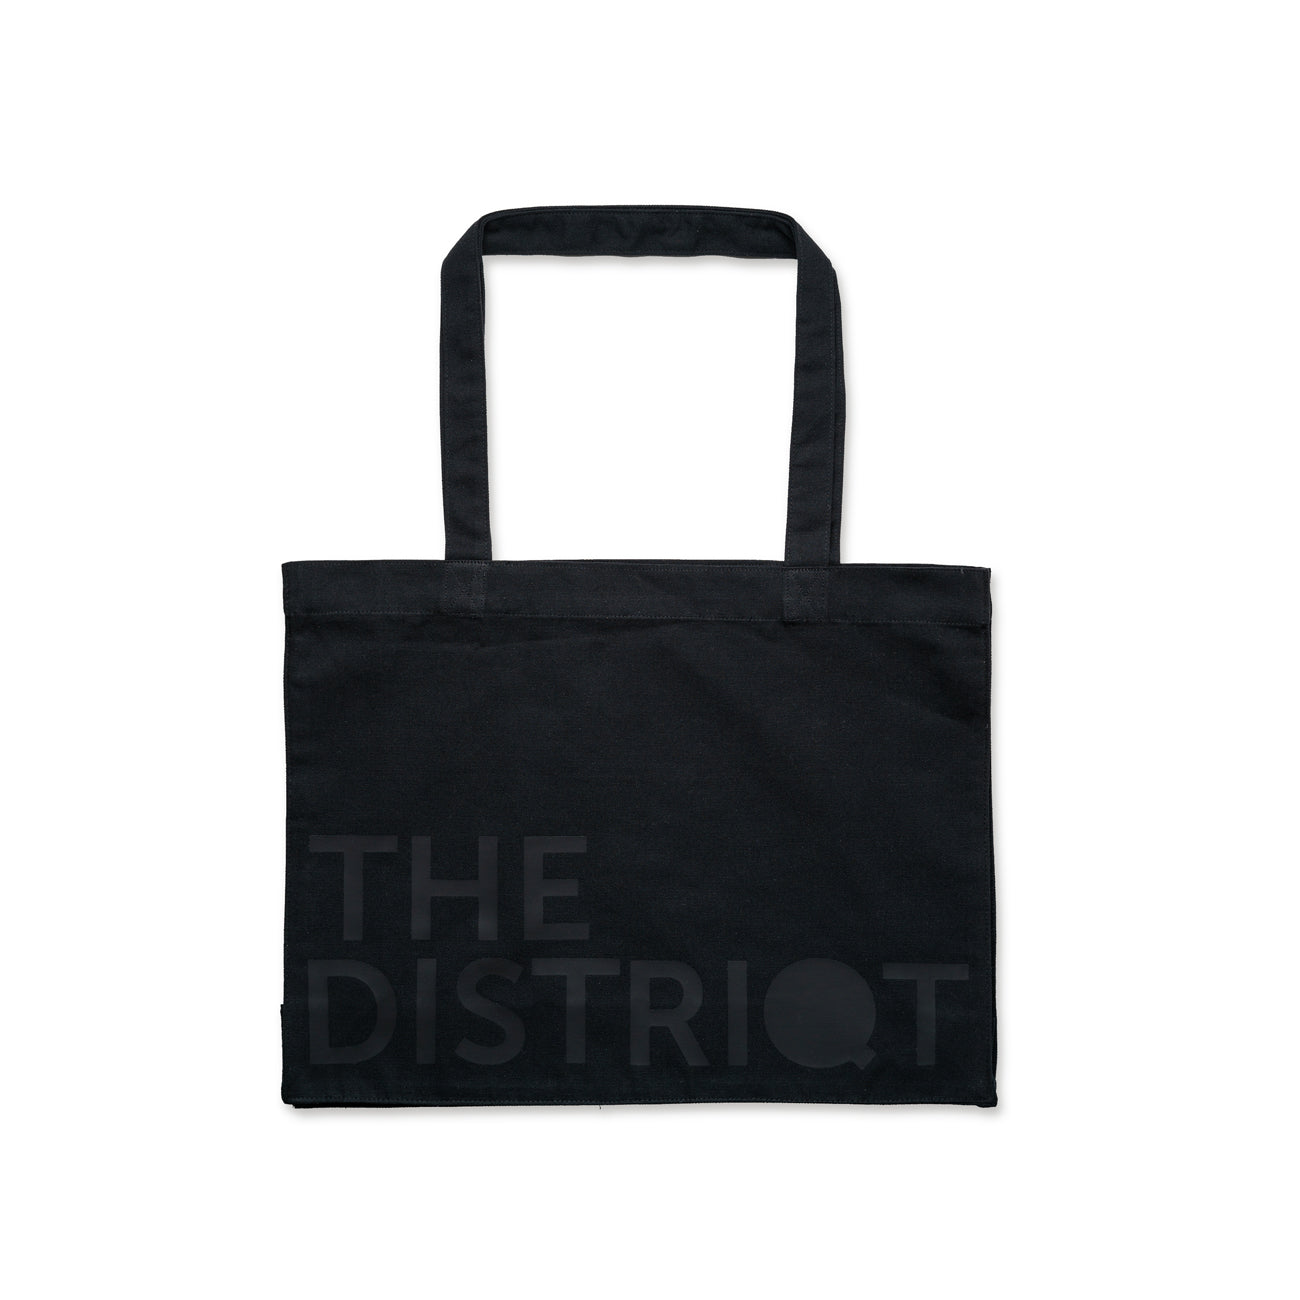 THE DISTRIQT BAG